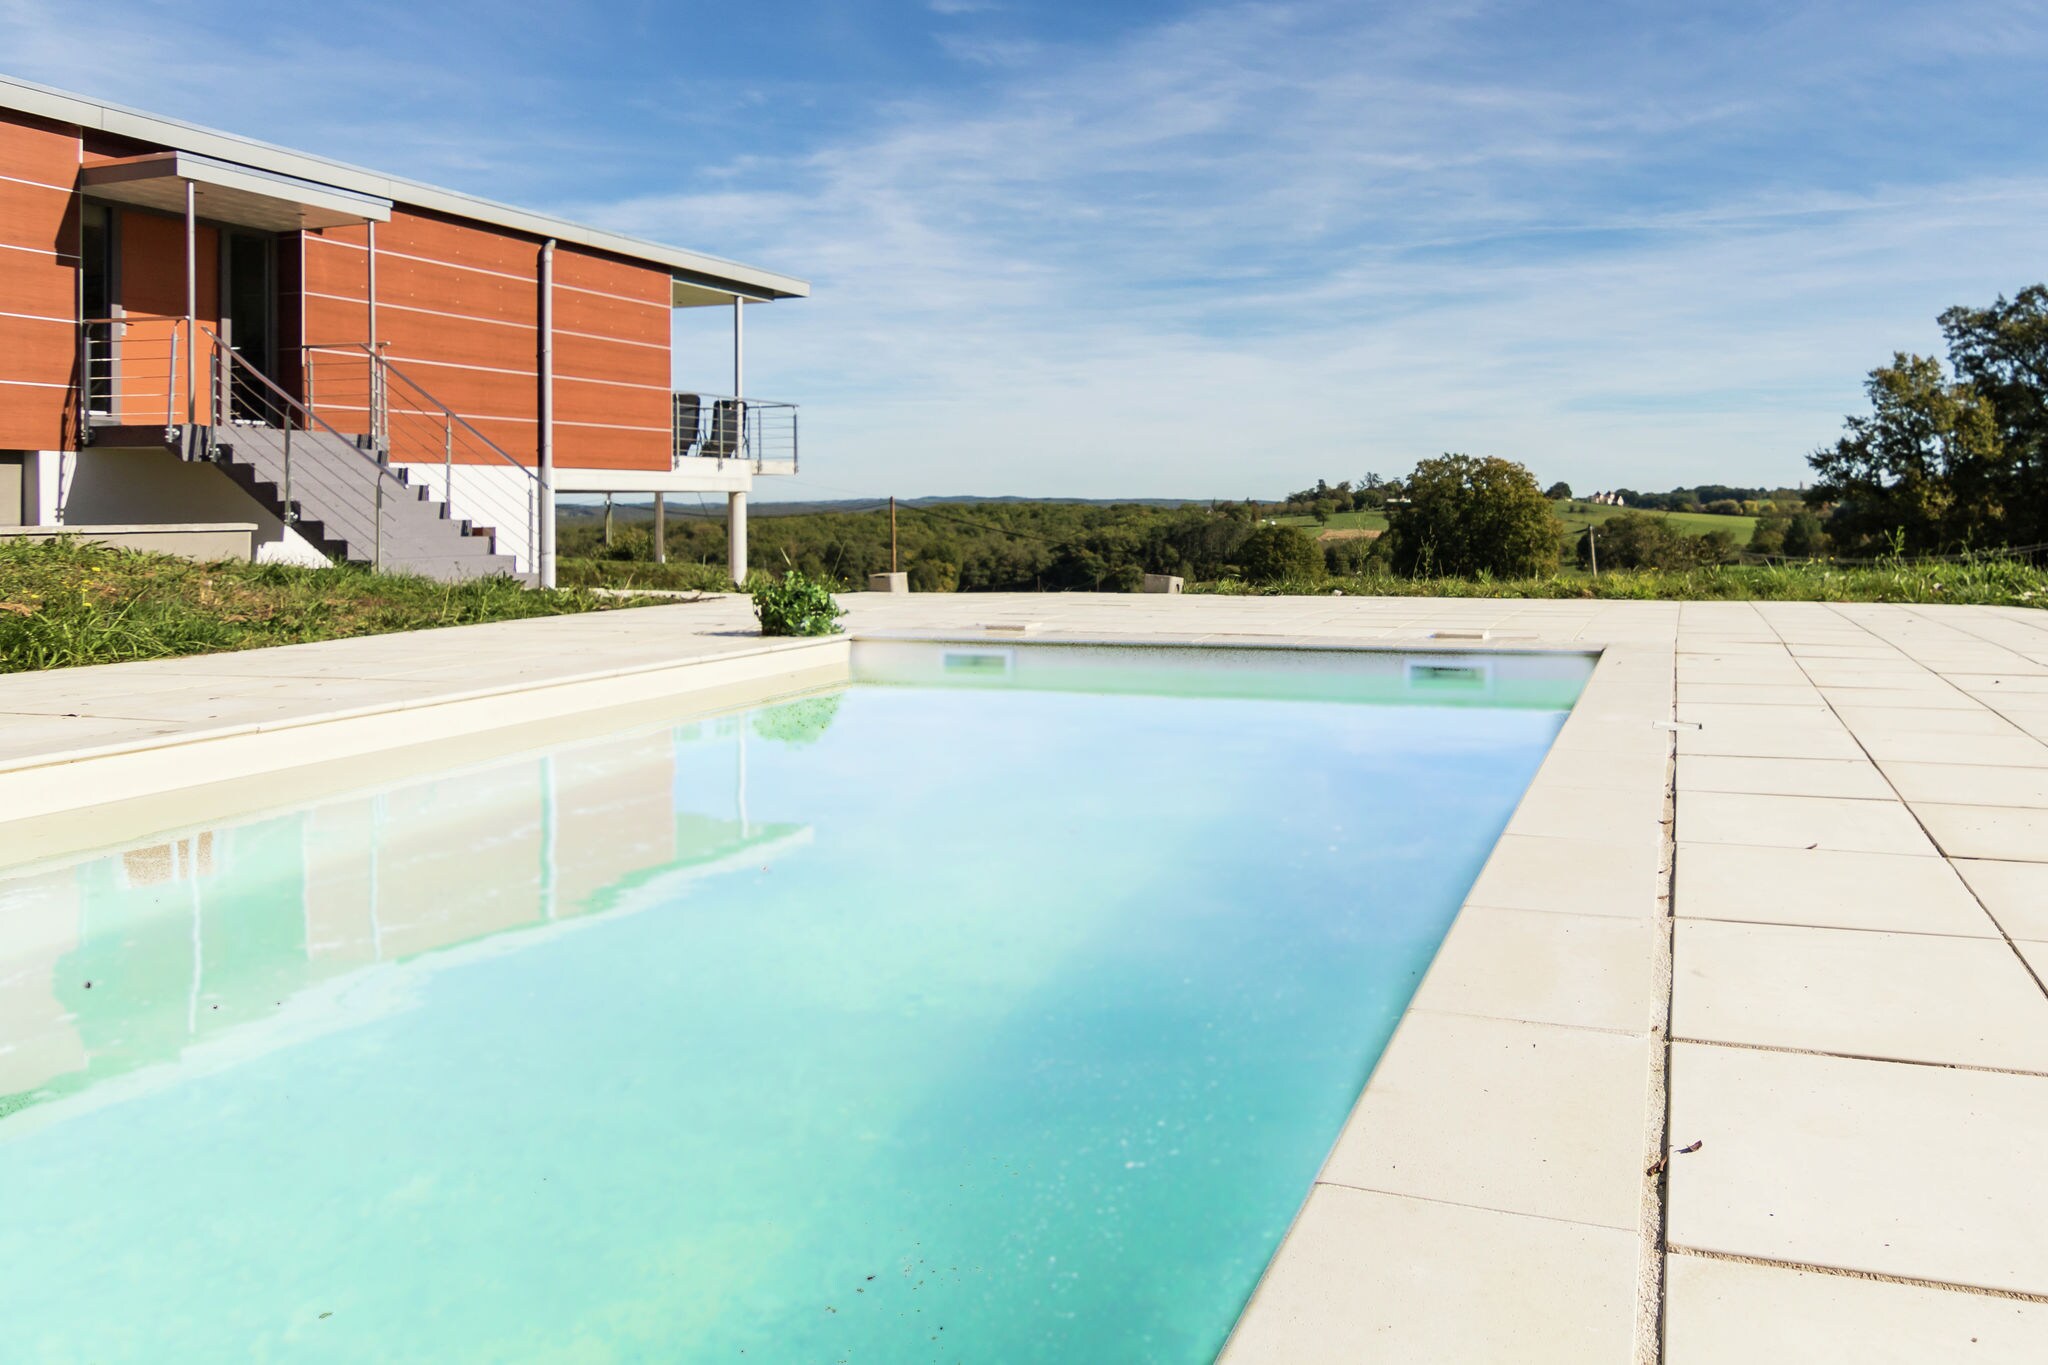 Luxuriöse Villa mit Swimmingpool in Limeyrat, Frankreich